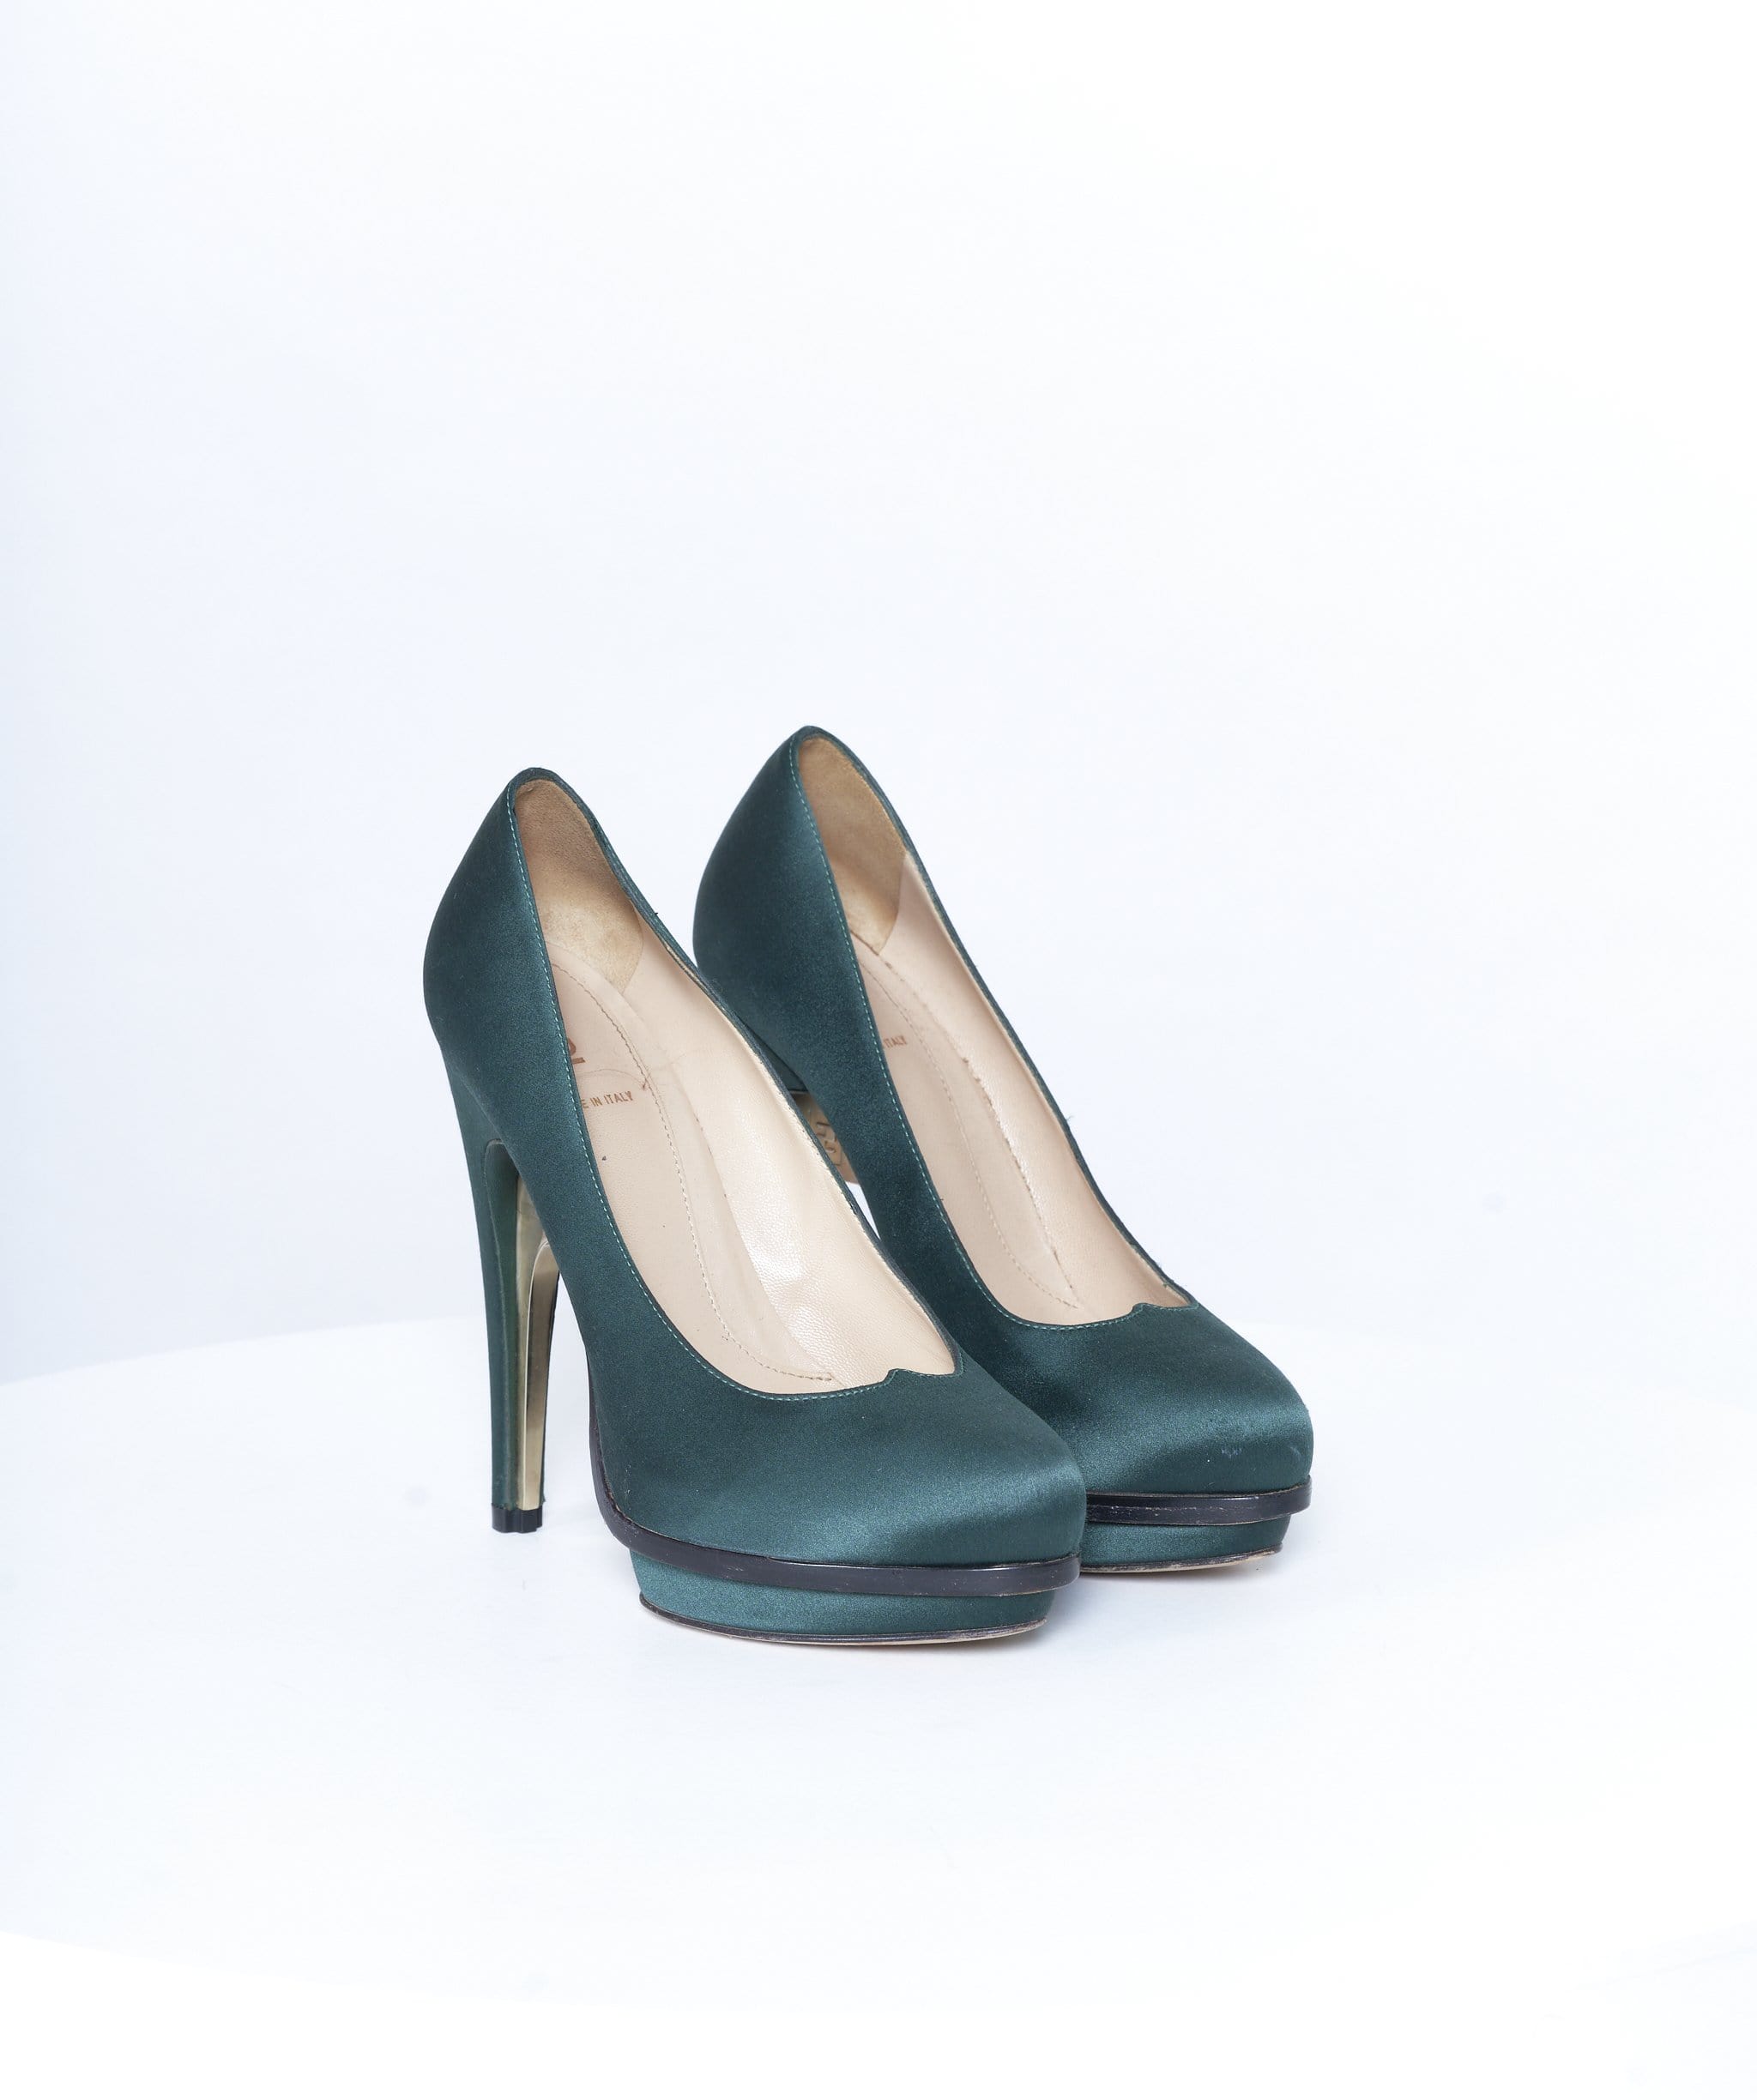 Fendi Fendi Green satin heels size 37.5